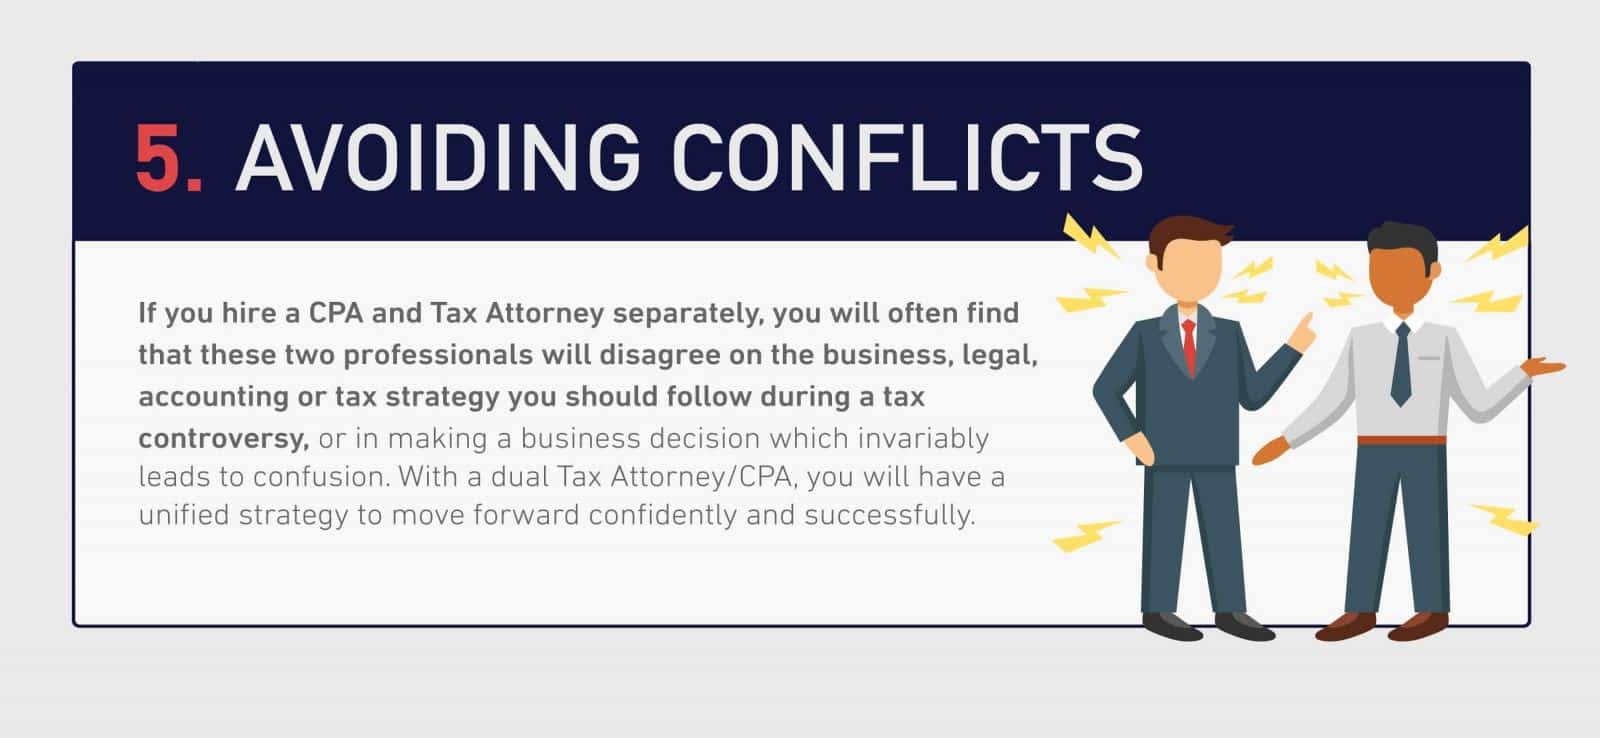 Avoiding-conflicts-klasing-associates-san-jose-tax-attorney